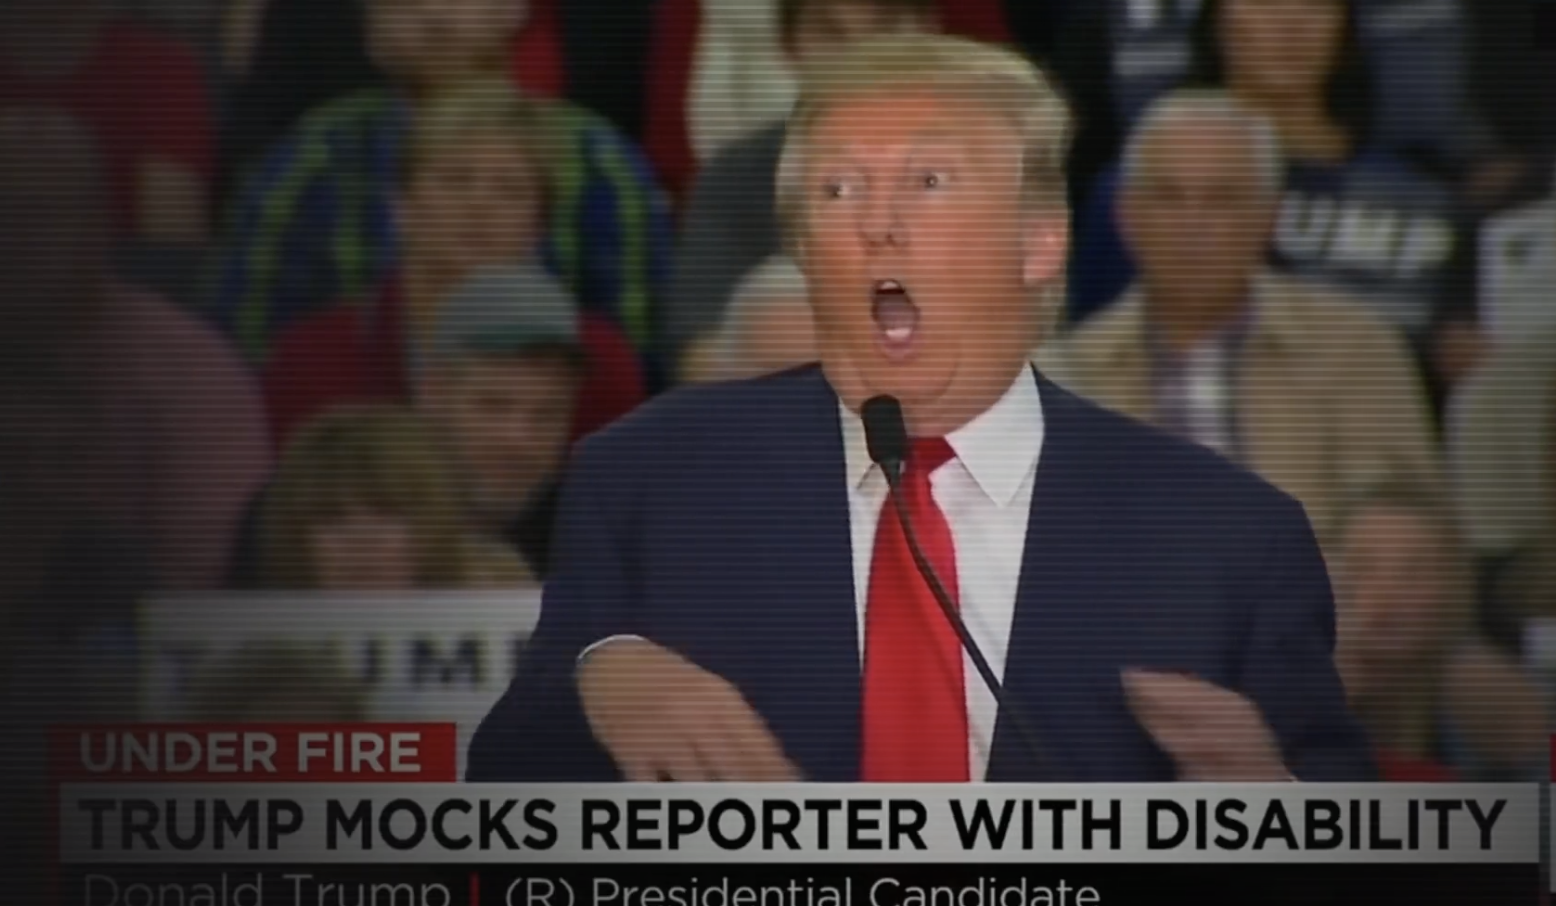 Donald Trump mocks a disabled reporter.